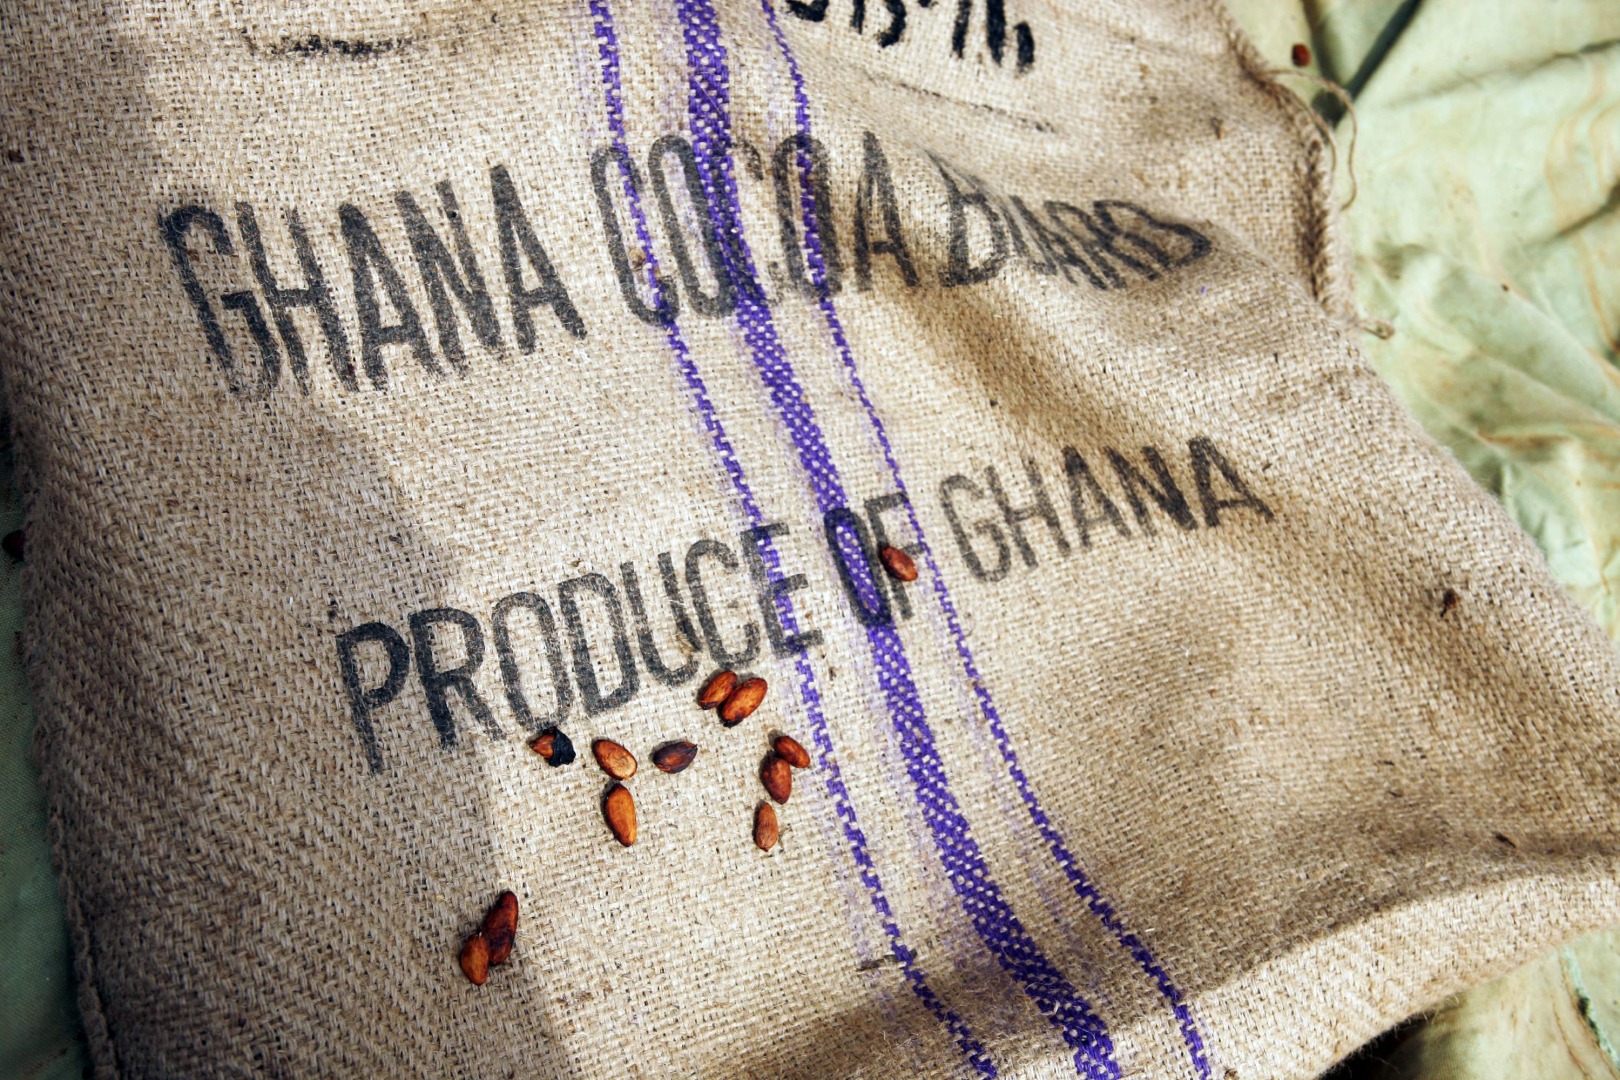 Dried cocoa beans outside of Kumasi, Ghana.